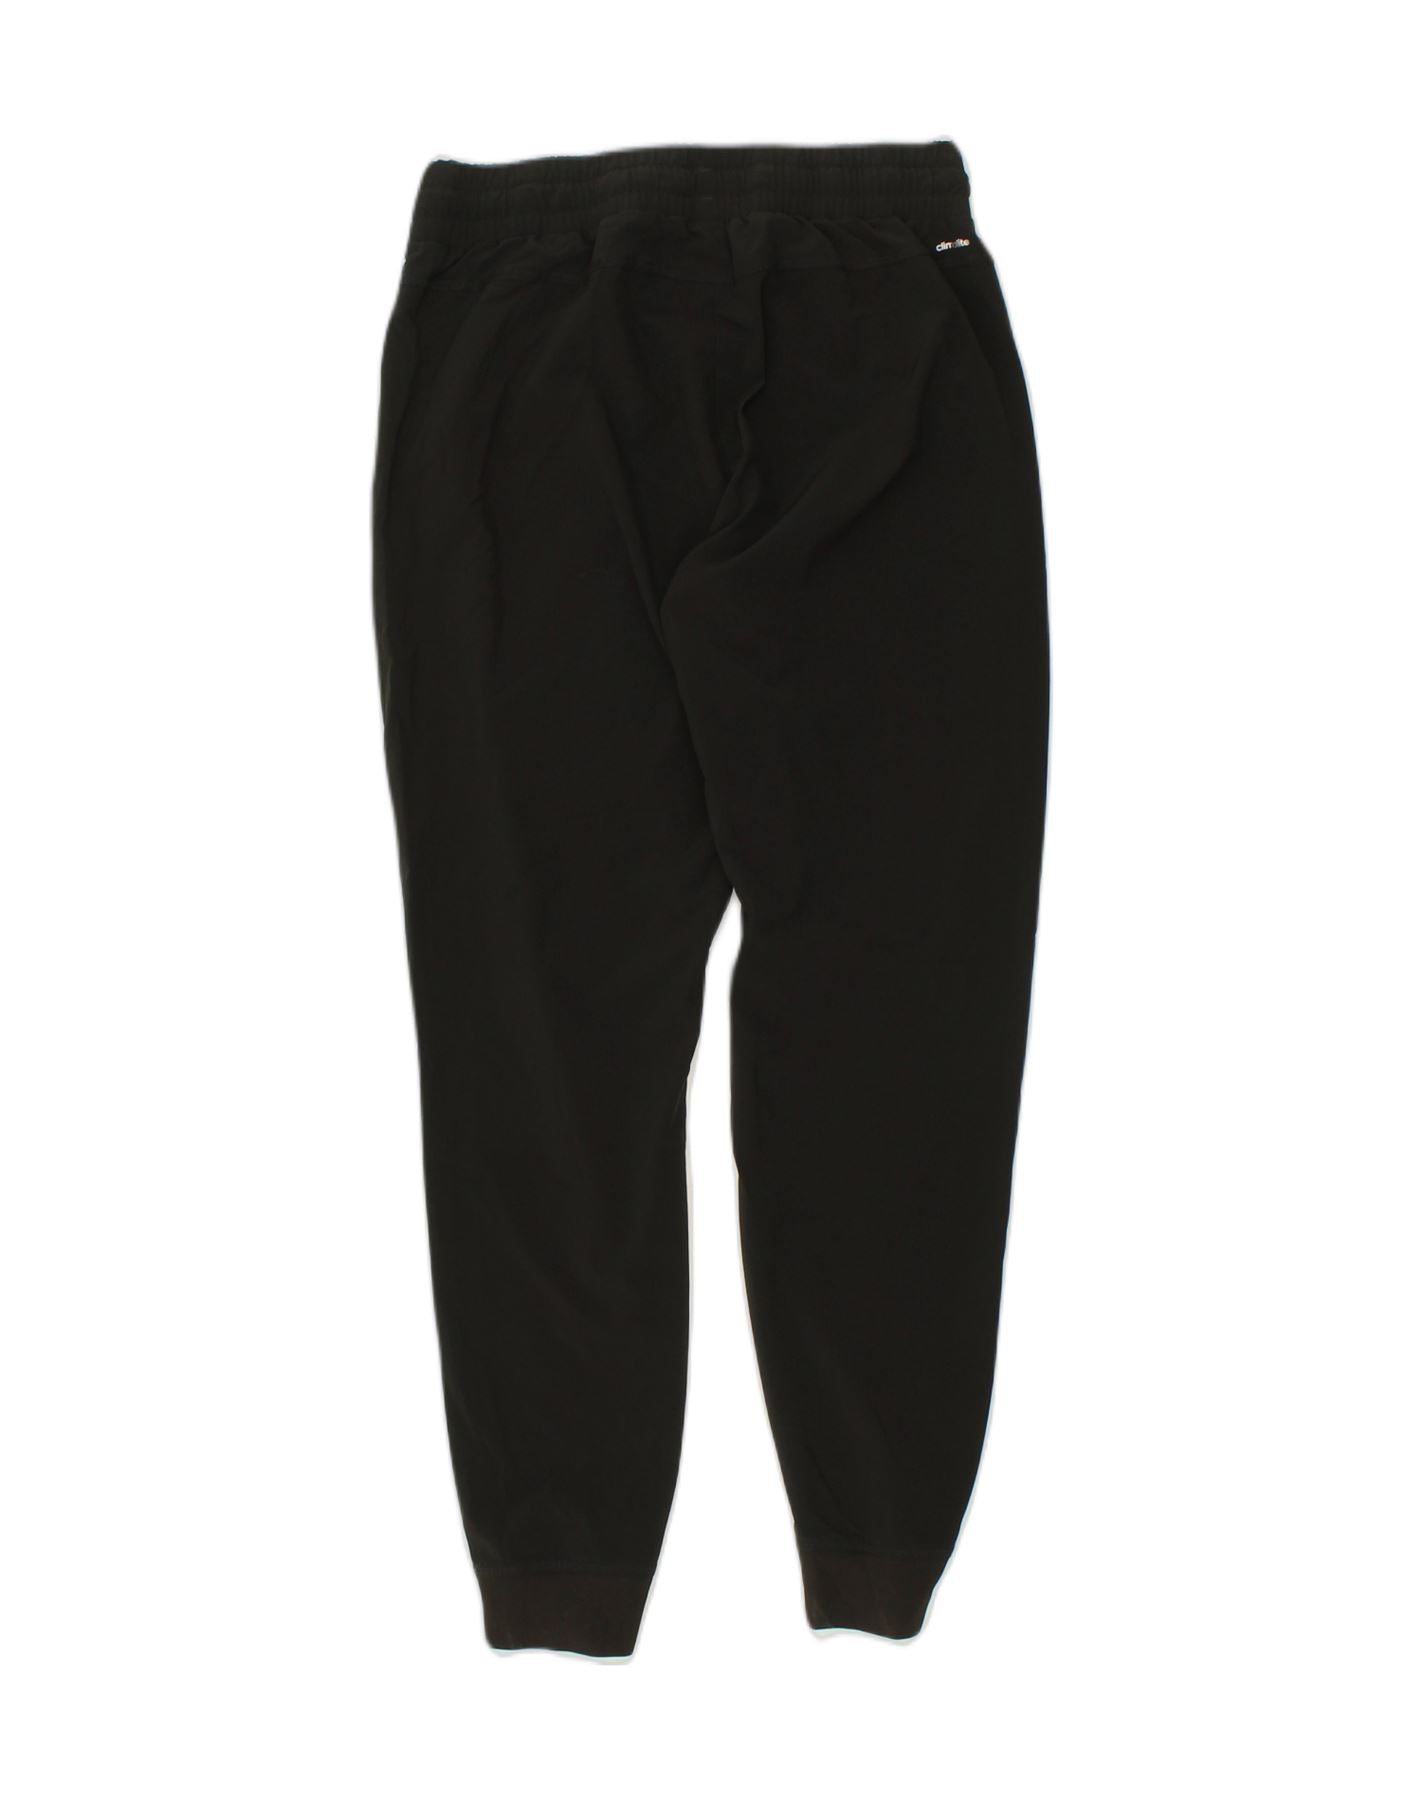 ADIDAS Womens Capri Tracksuit Trousers UK 8/10 Small Black Sports